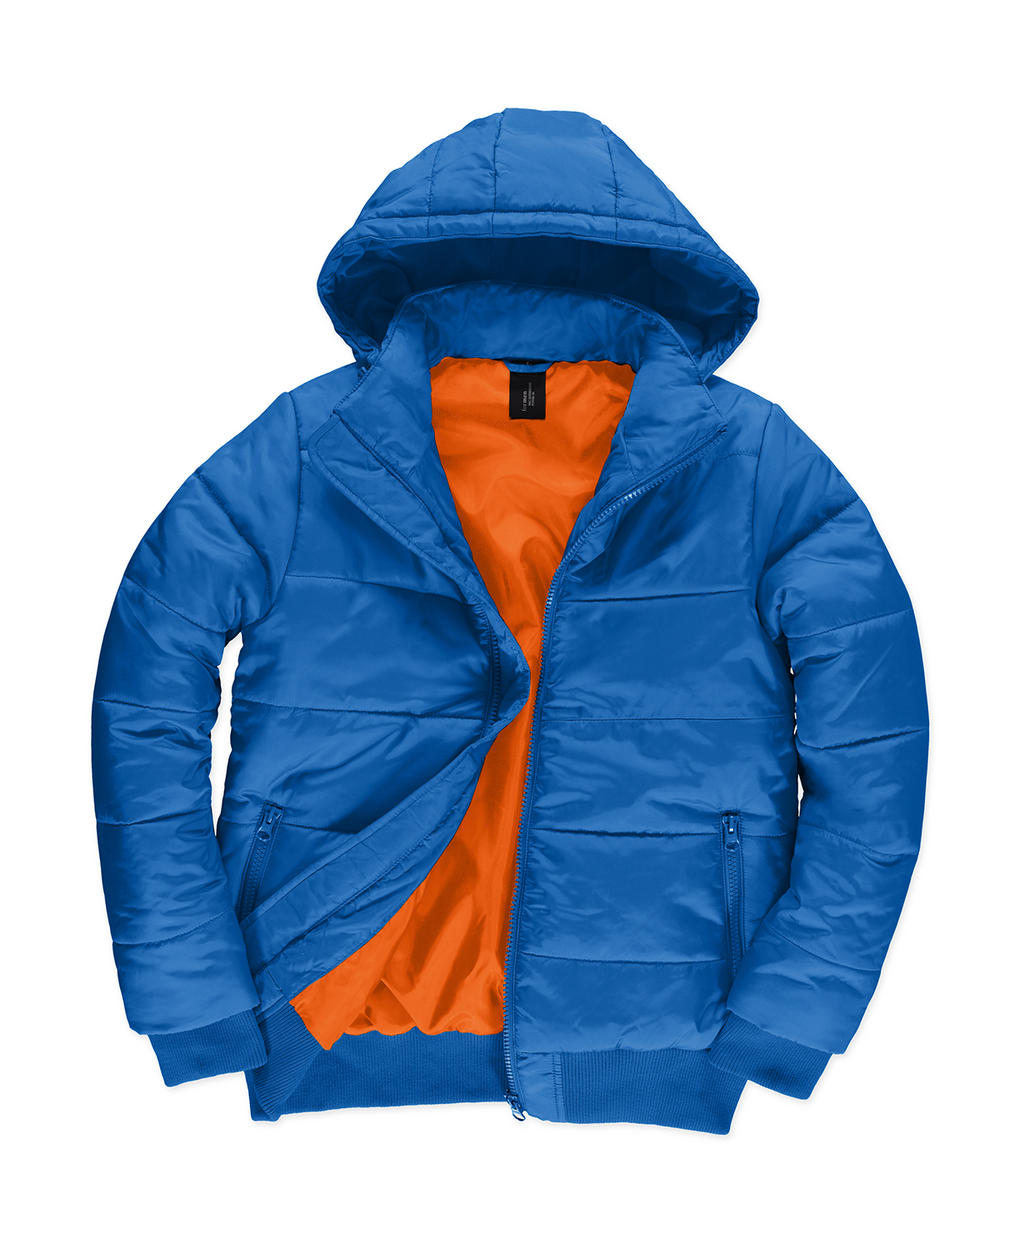  Superhood/men Jacket in Farbe Royal/Neon Orange